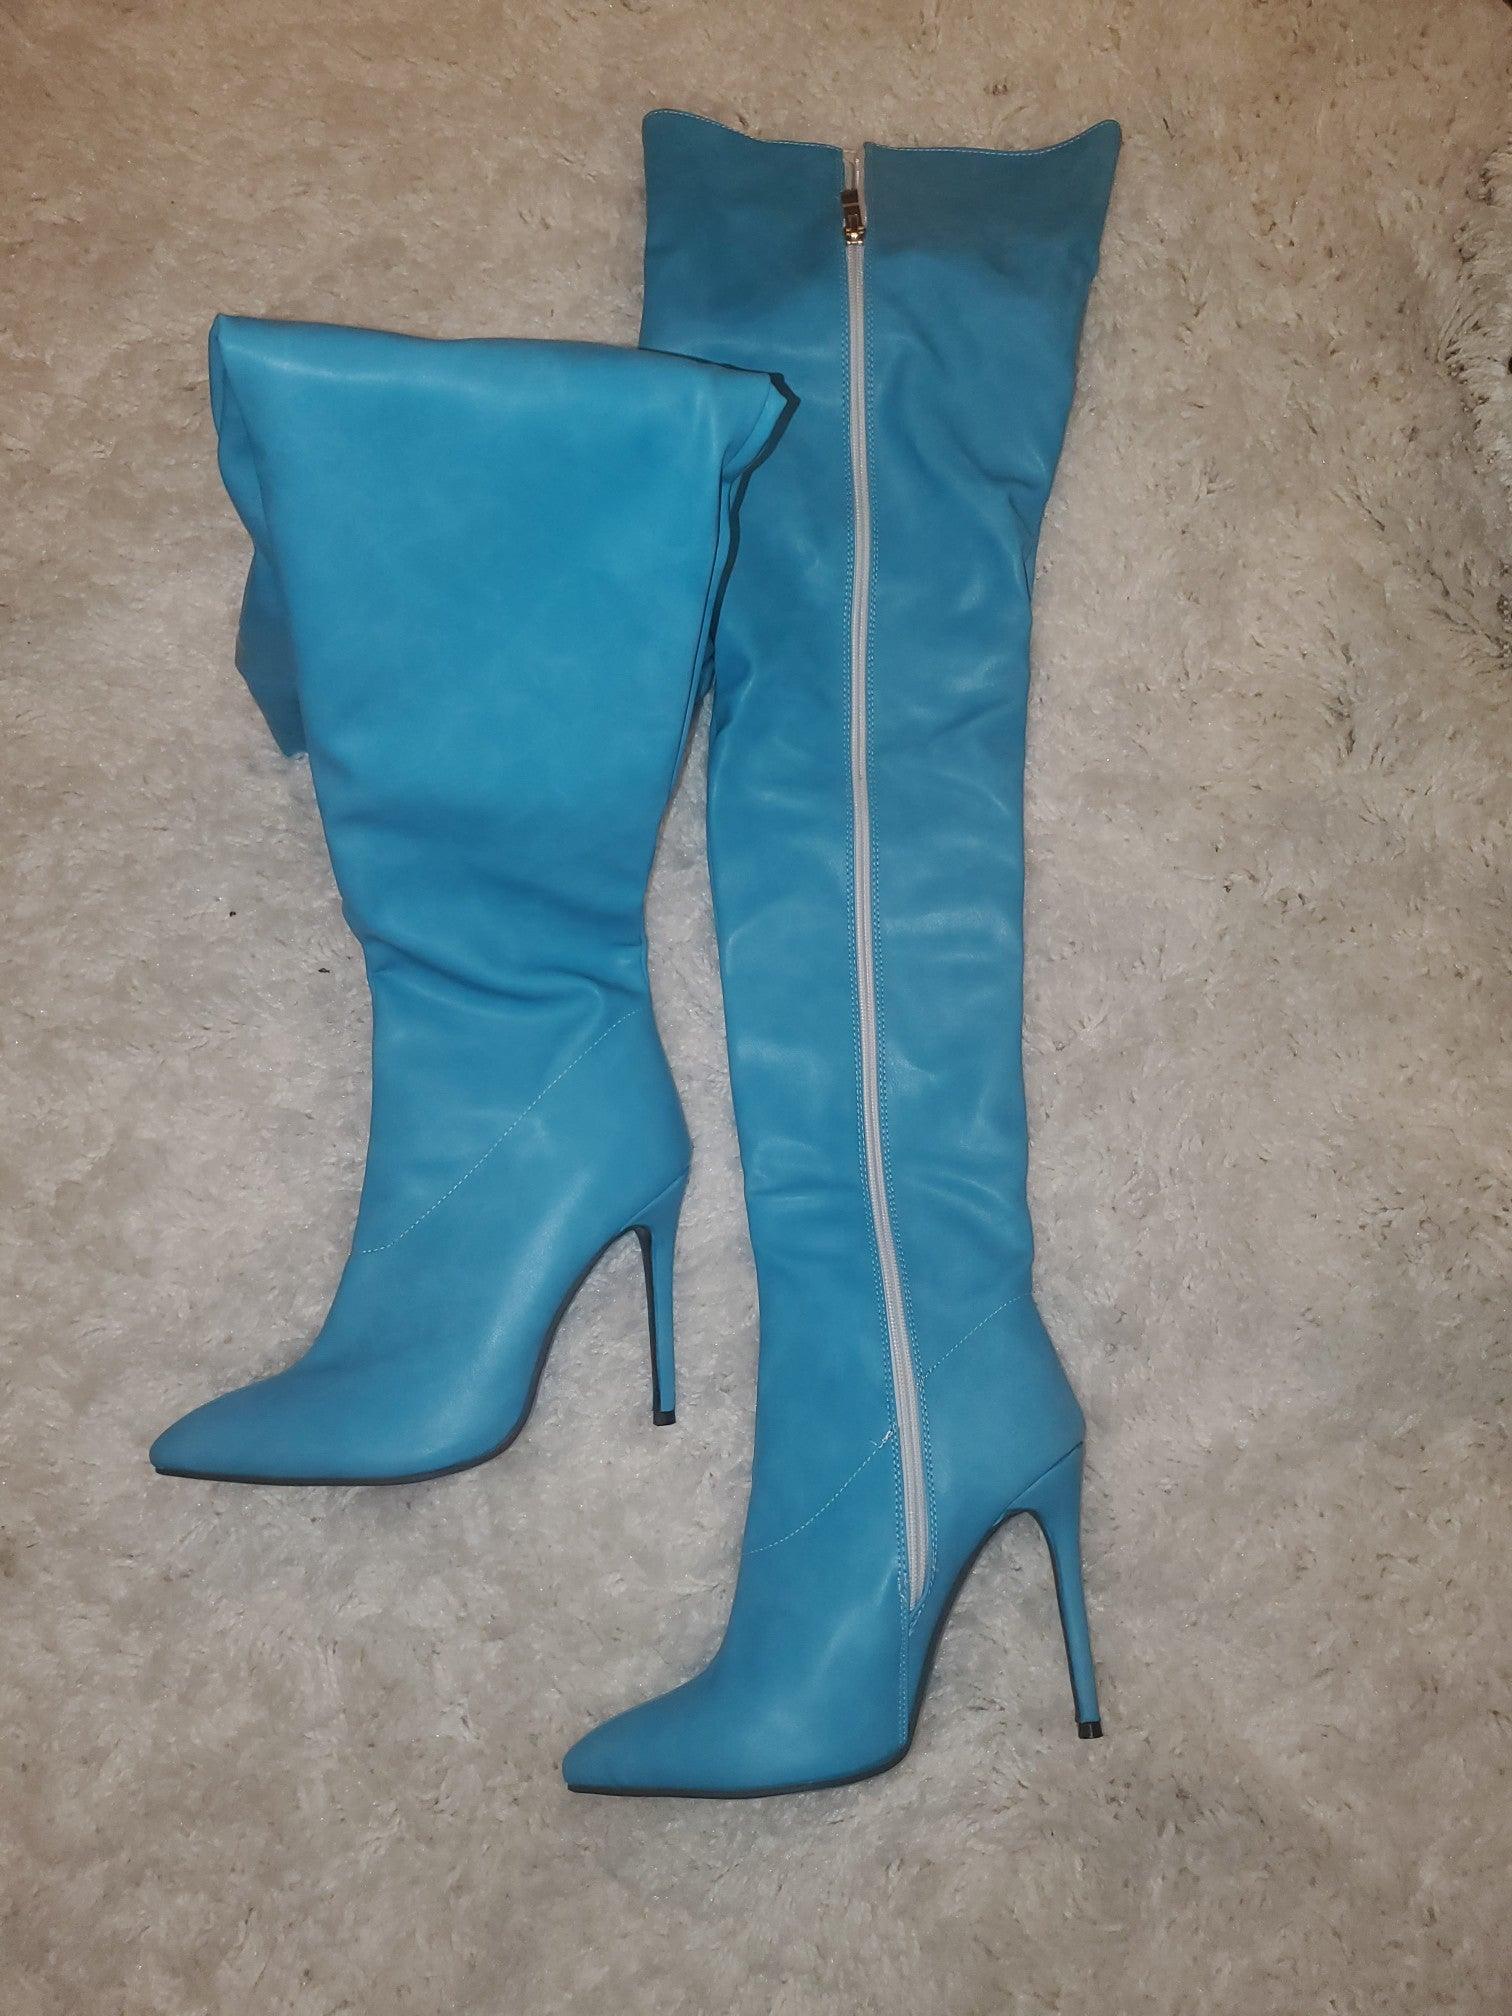 Blue thigh boots - Sweet J's Shoetique LLC